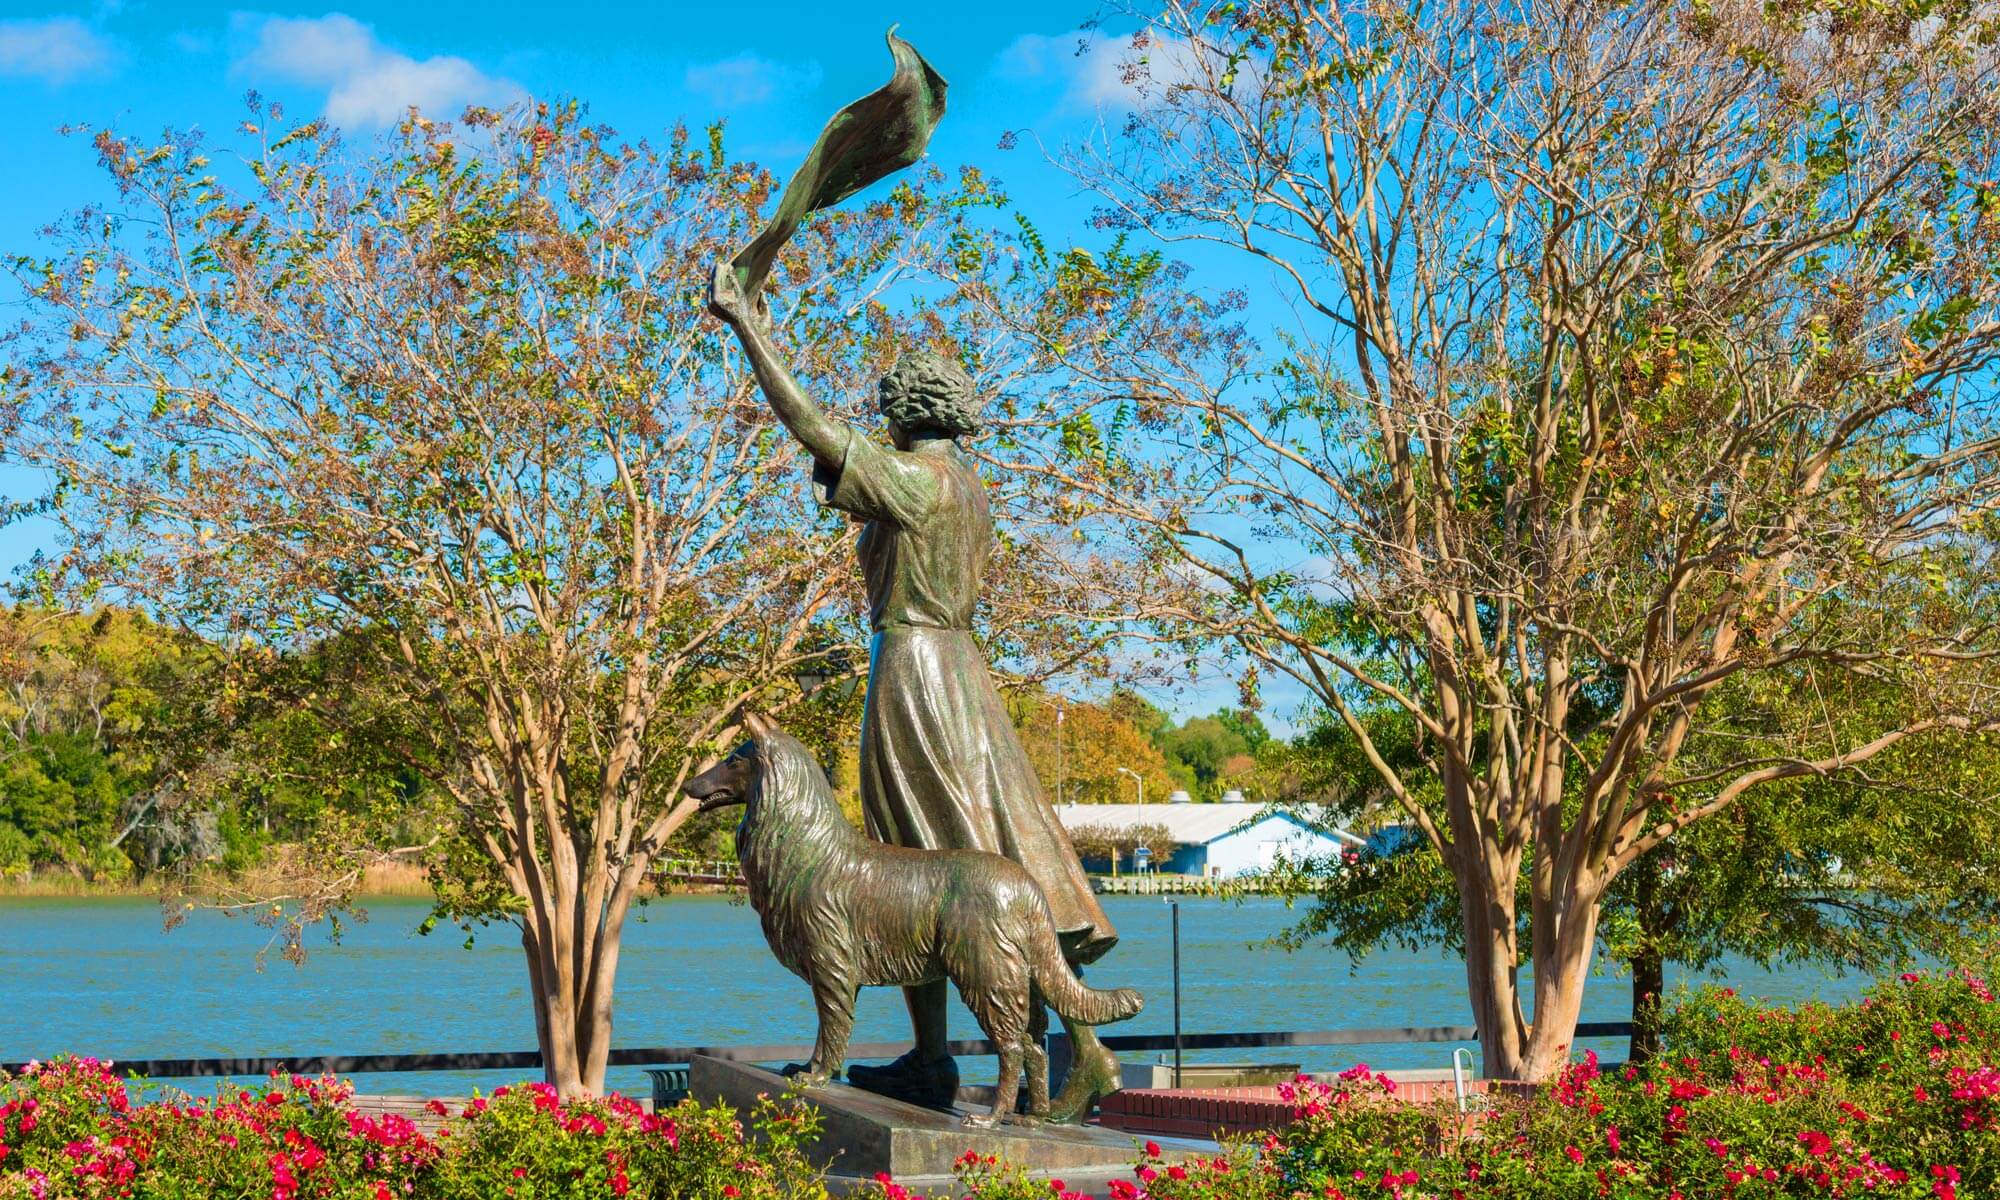 The famous 'Waving Girl' statue on River Street in Savannah, GA